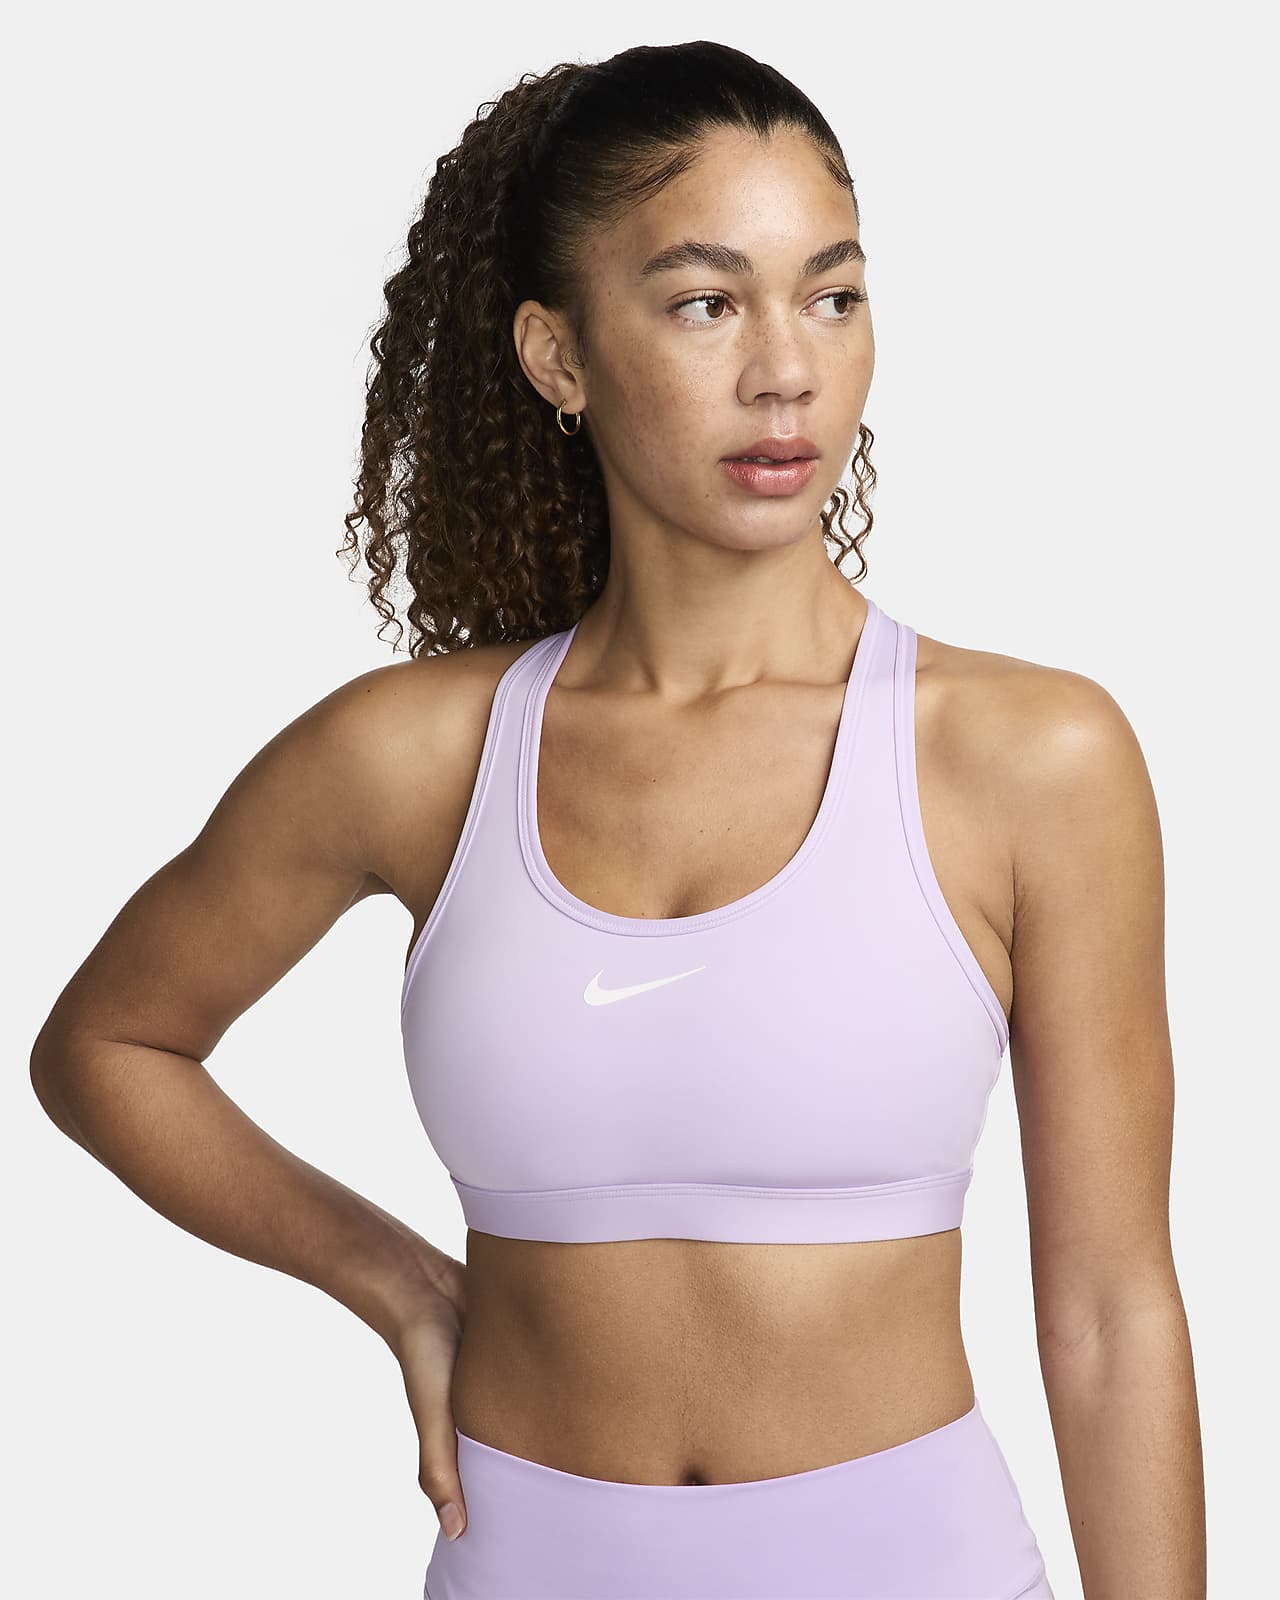 Nike Swoosh Women's Medium Support Sports Bra - Bauman's Running & Walking  Shop